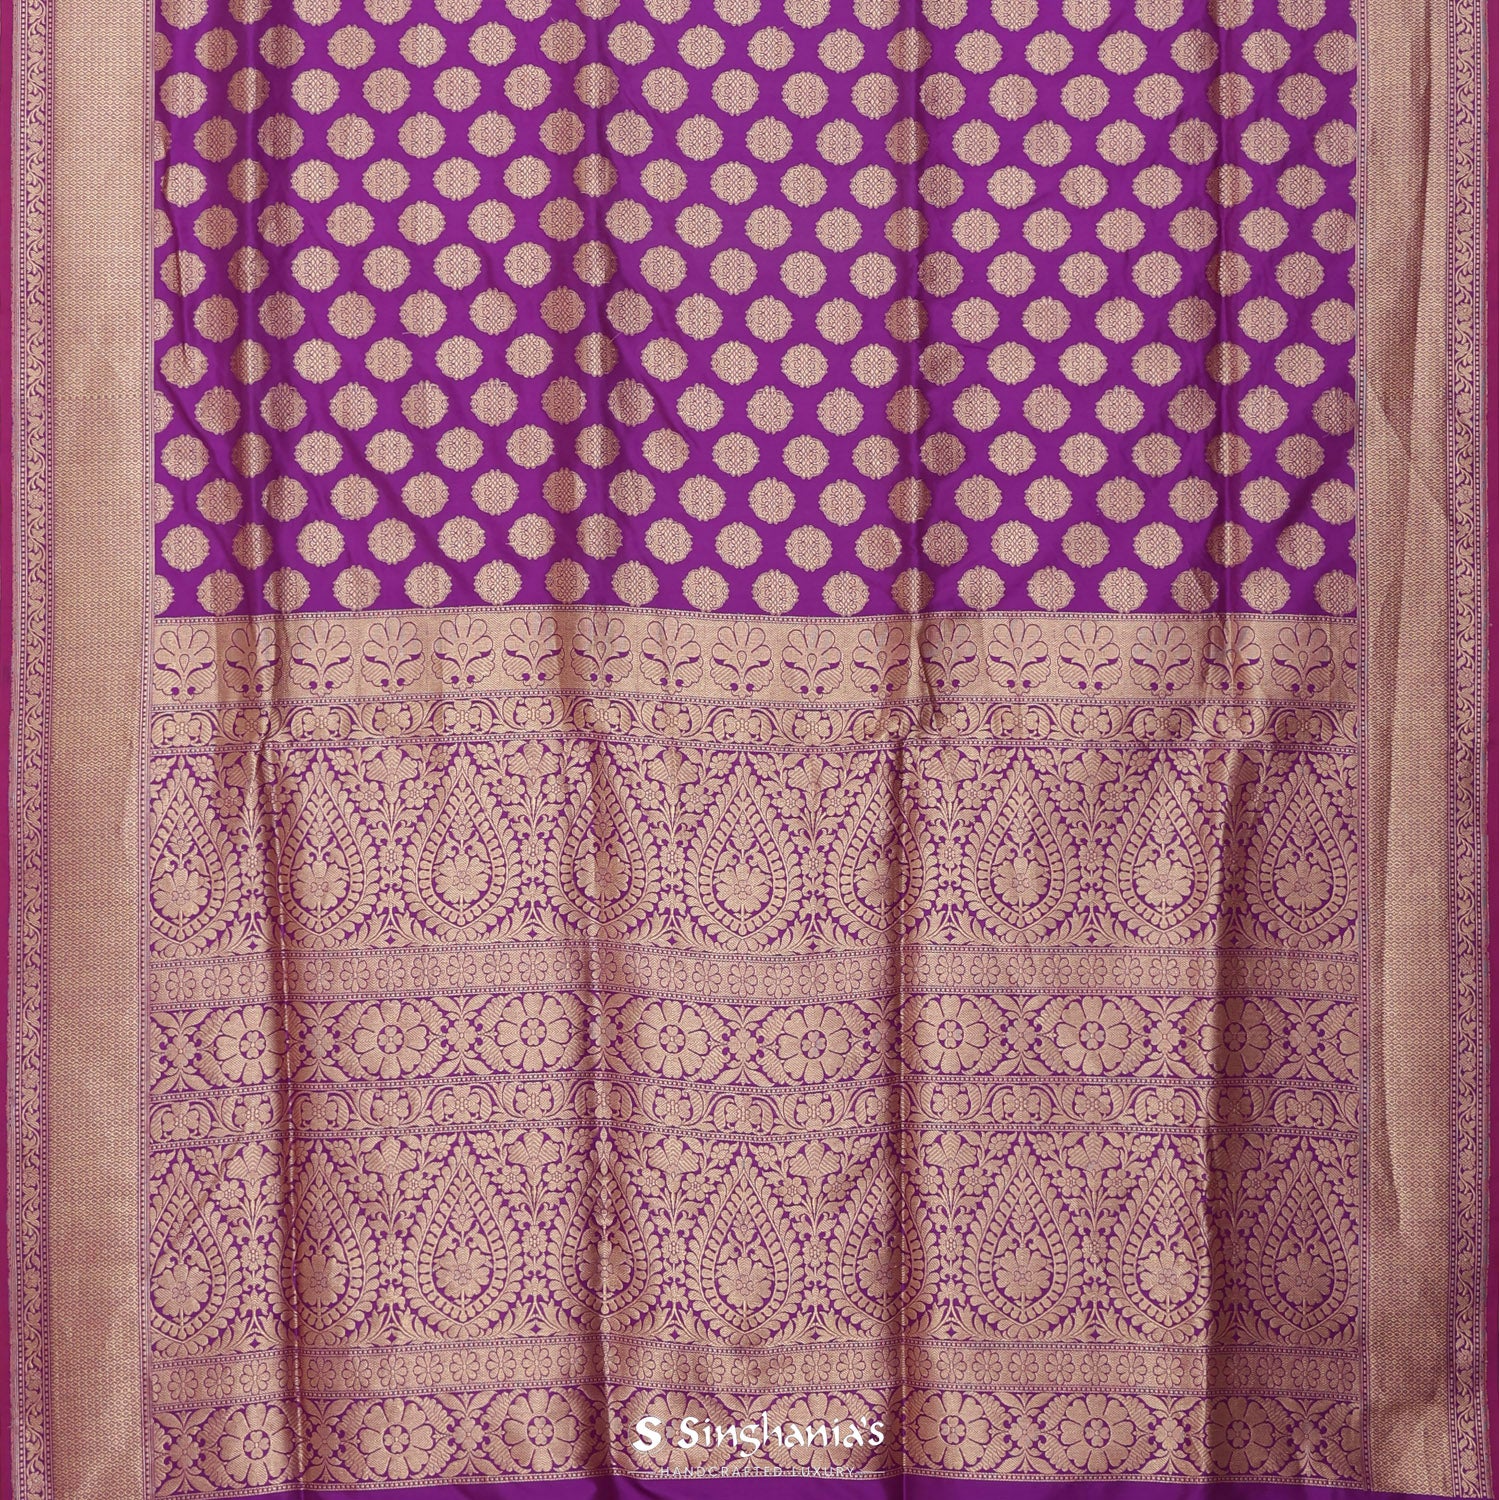 Mauveine Purple Silk Saree With Banarasi Weaving